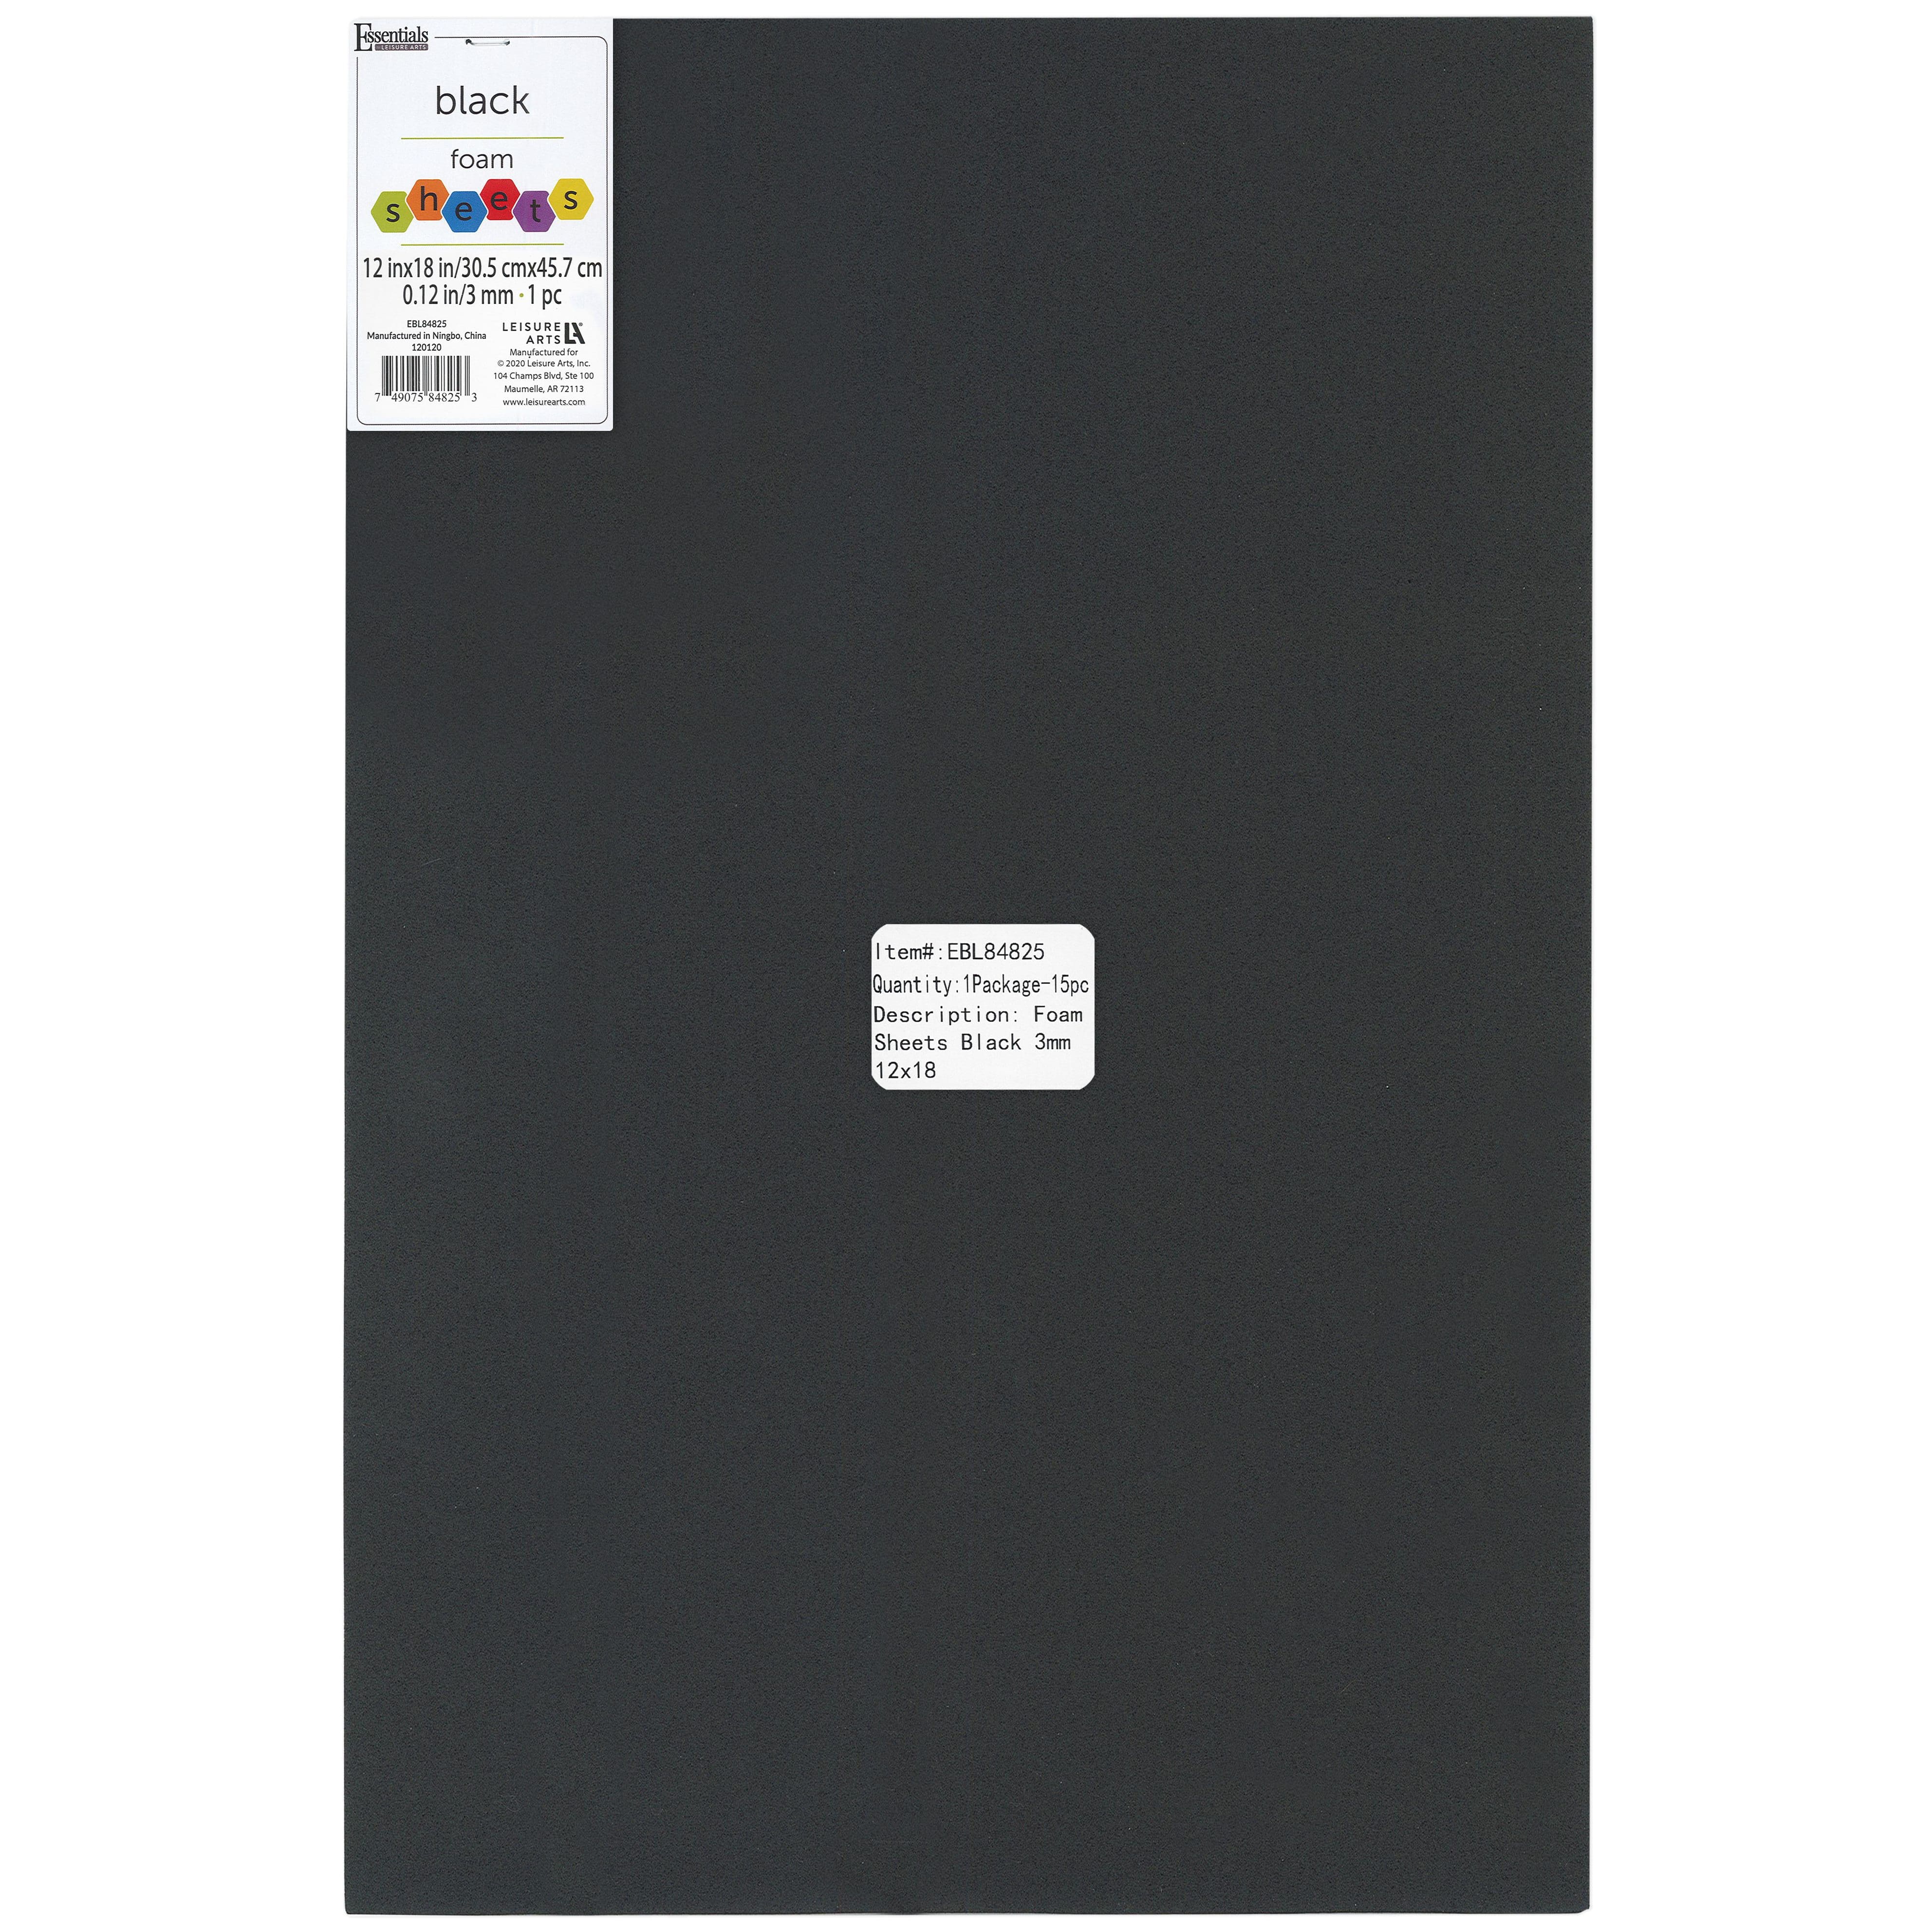 Essentials by Leisure Arts Black Foam Sheets, 15ct.